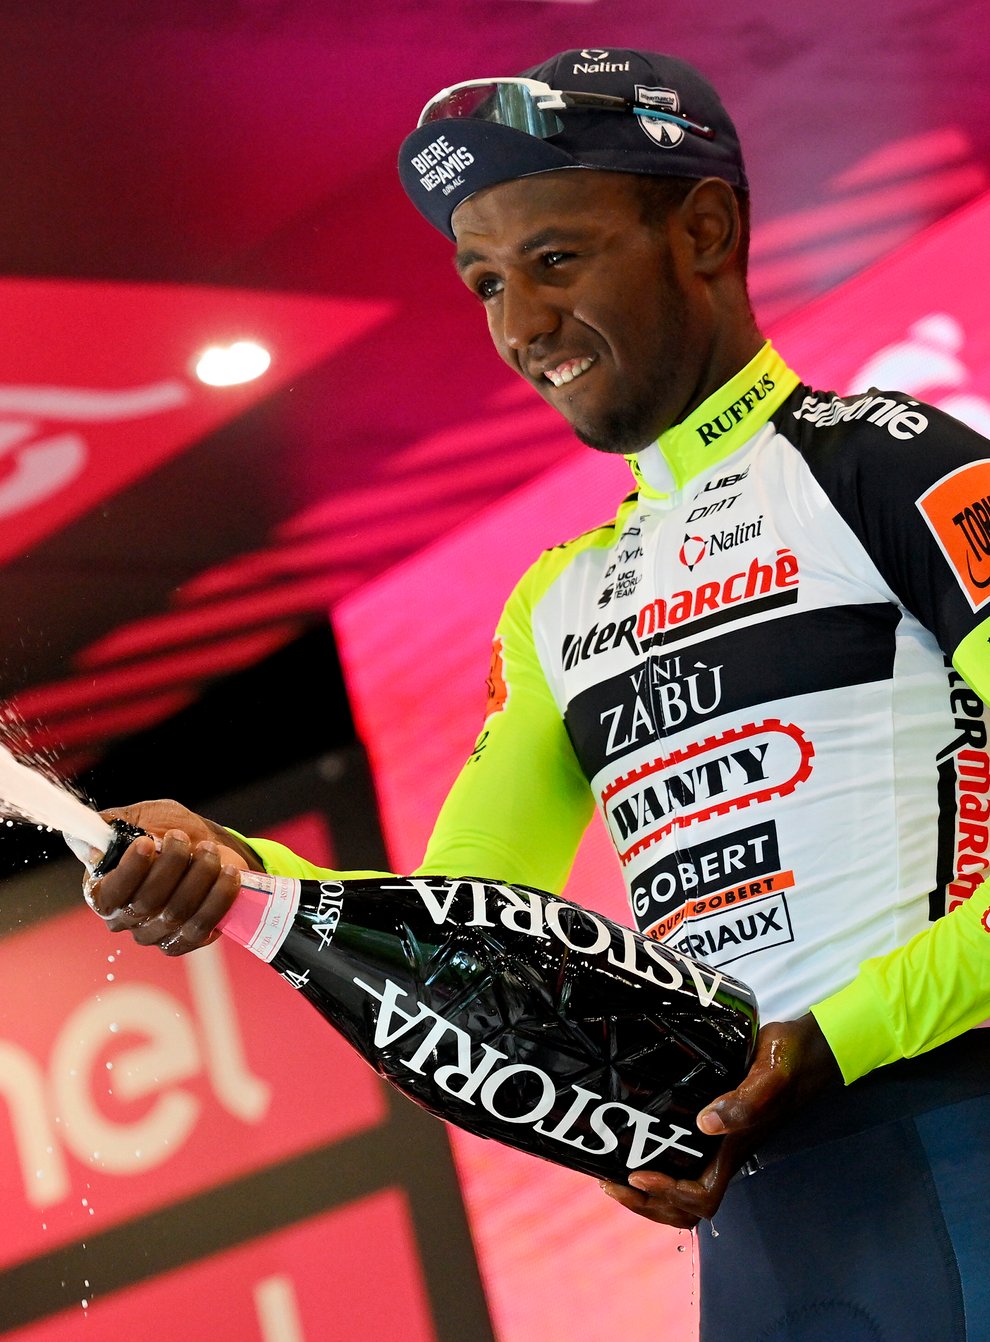 Biniam Girmay celebrates winning the 10th stage of the Giro D’Italia (Massimo Paolone/LaPresse via AP)